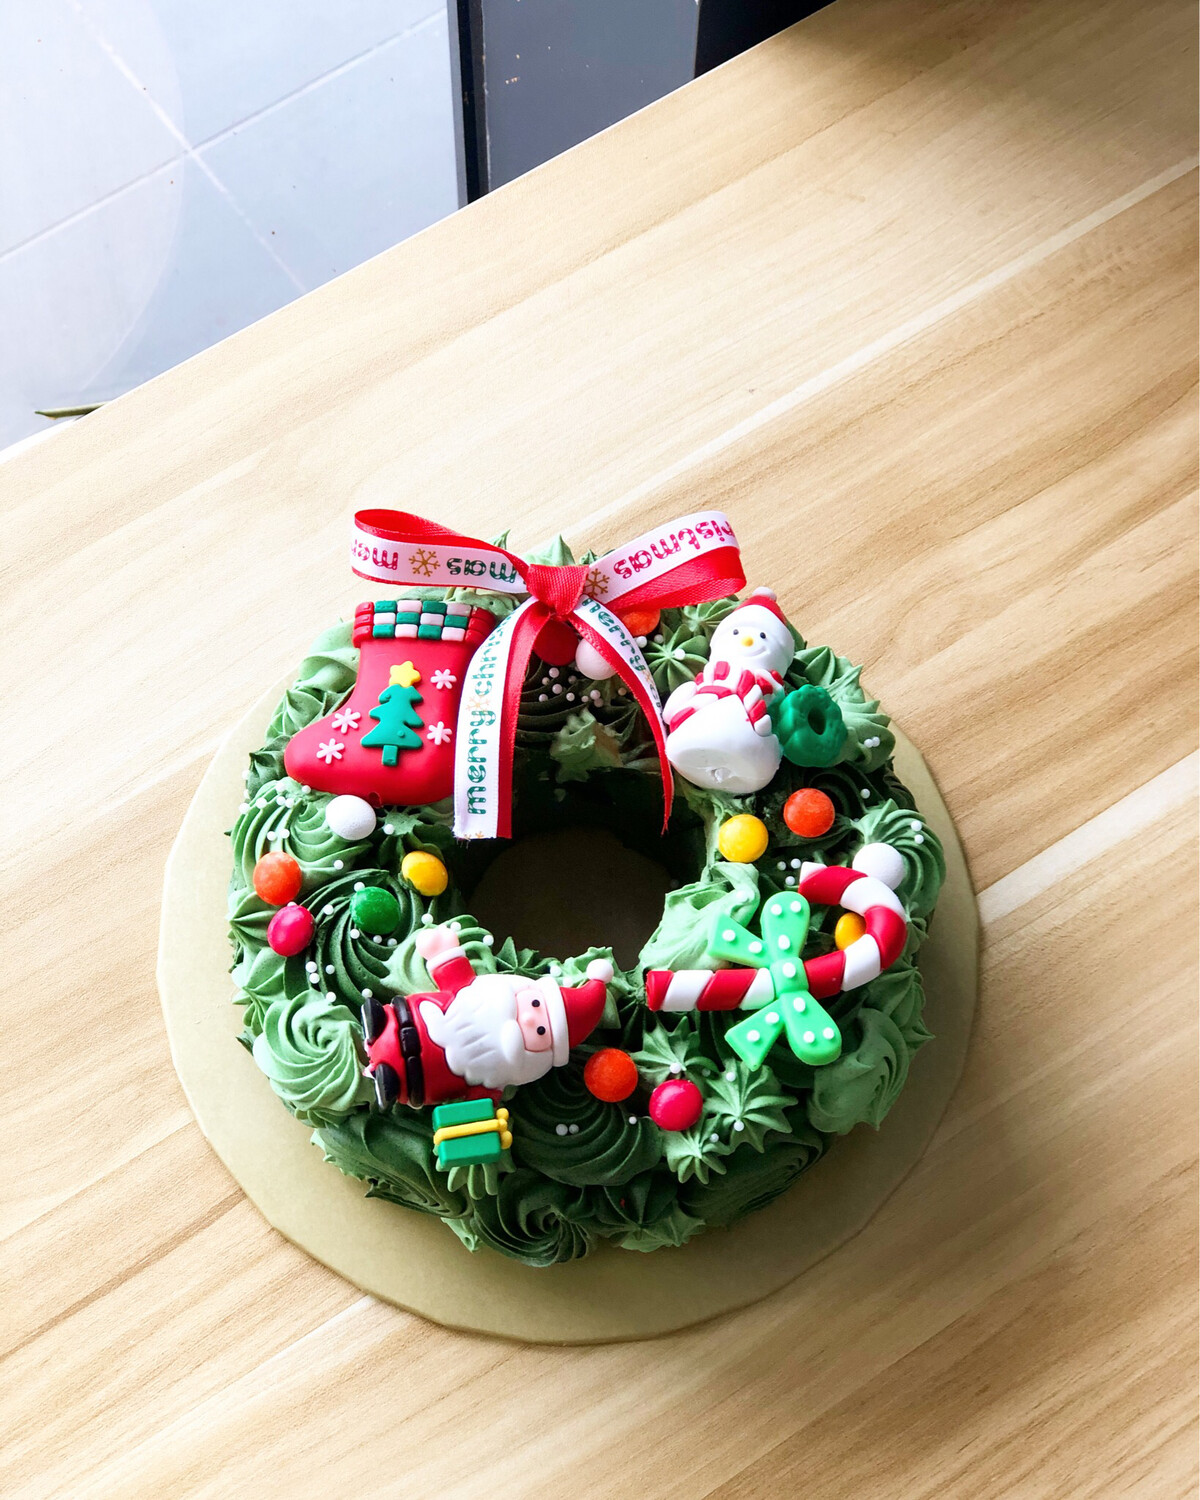 Festive - Christmas / Xmas / Wreath Cake